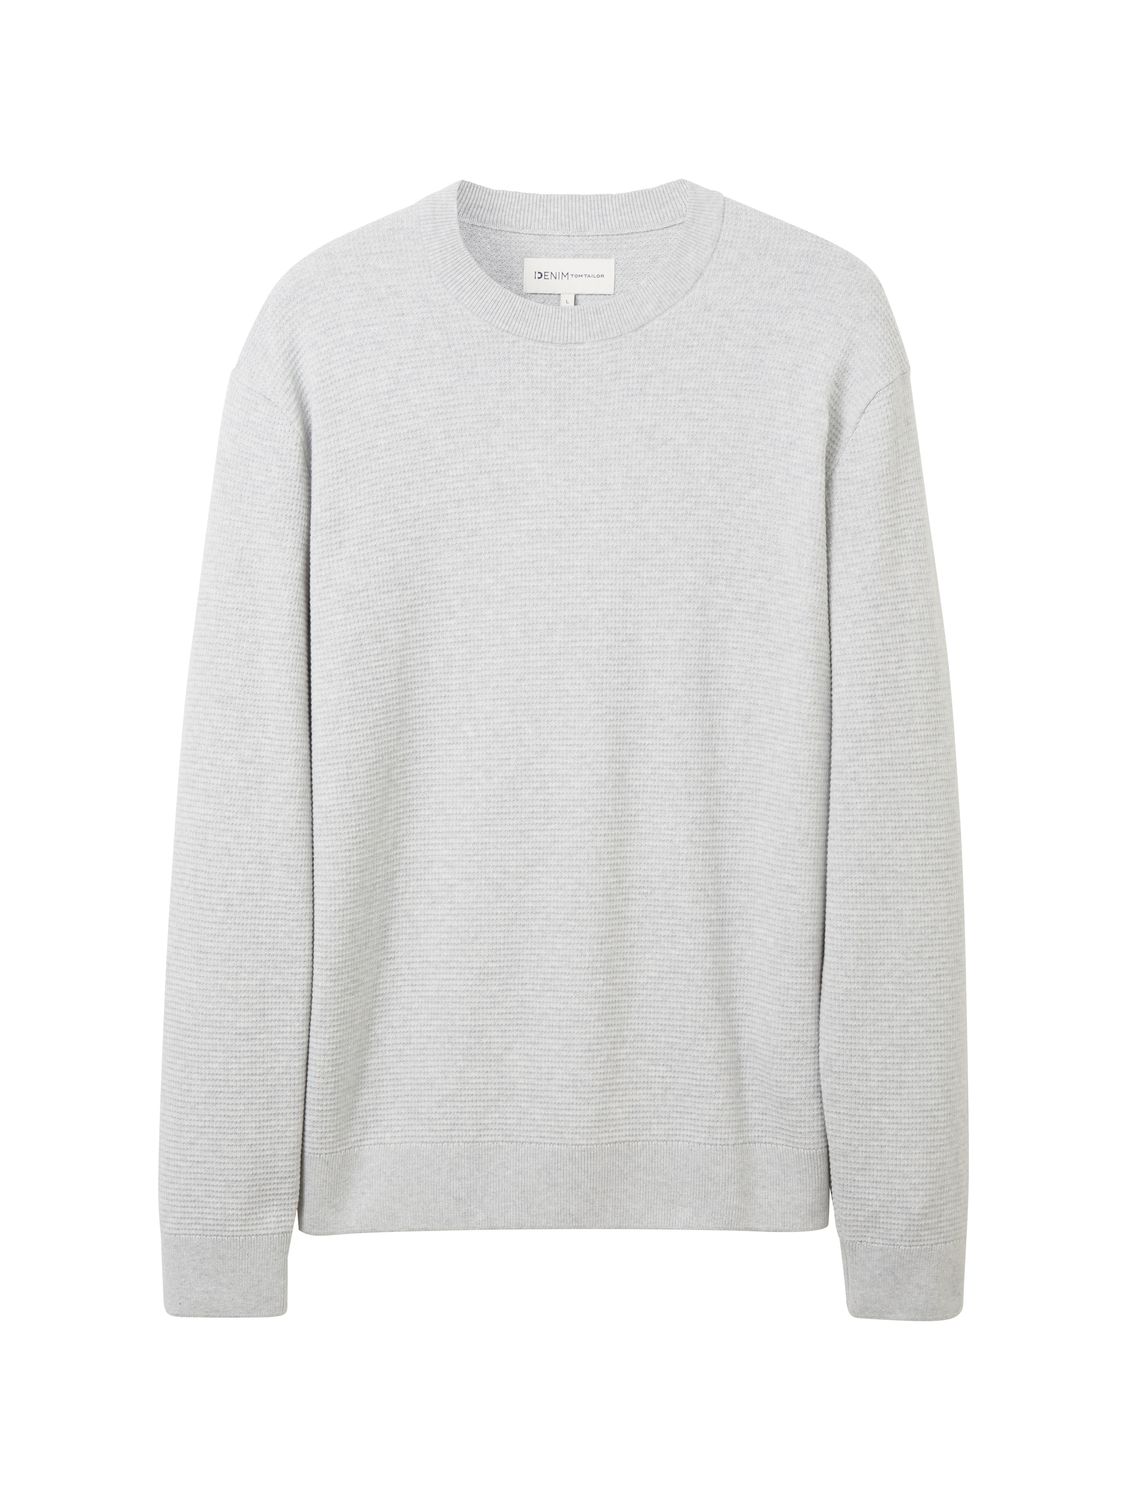 Пуловер TOM TAILOR Denim STRUCTURED BASIC, серый худи tom tailor размер m серый